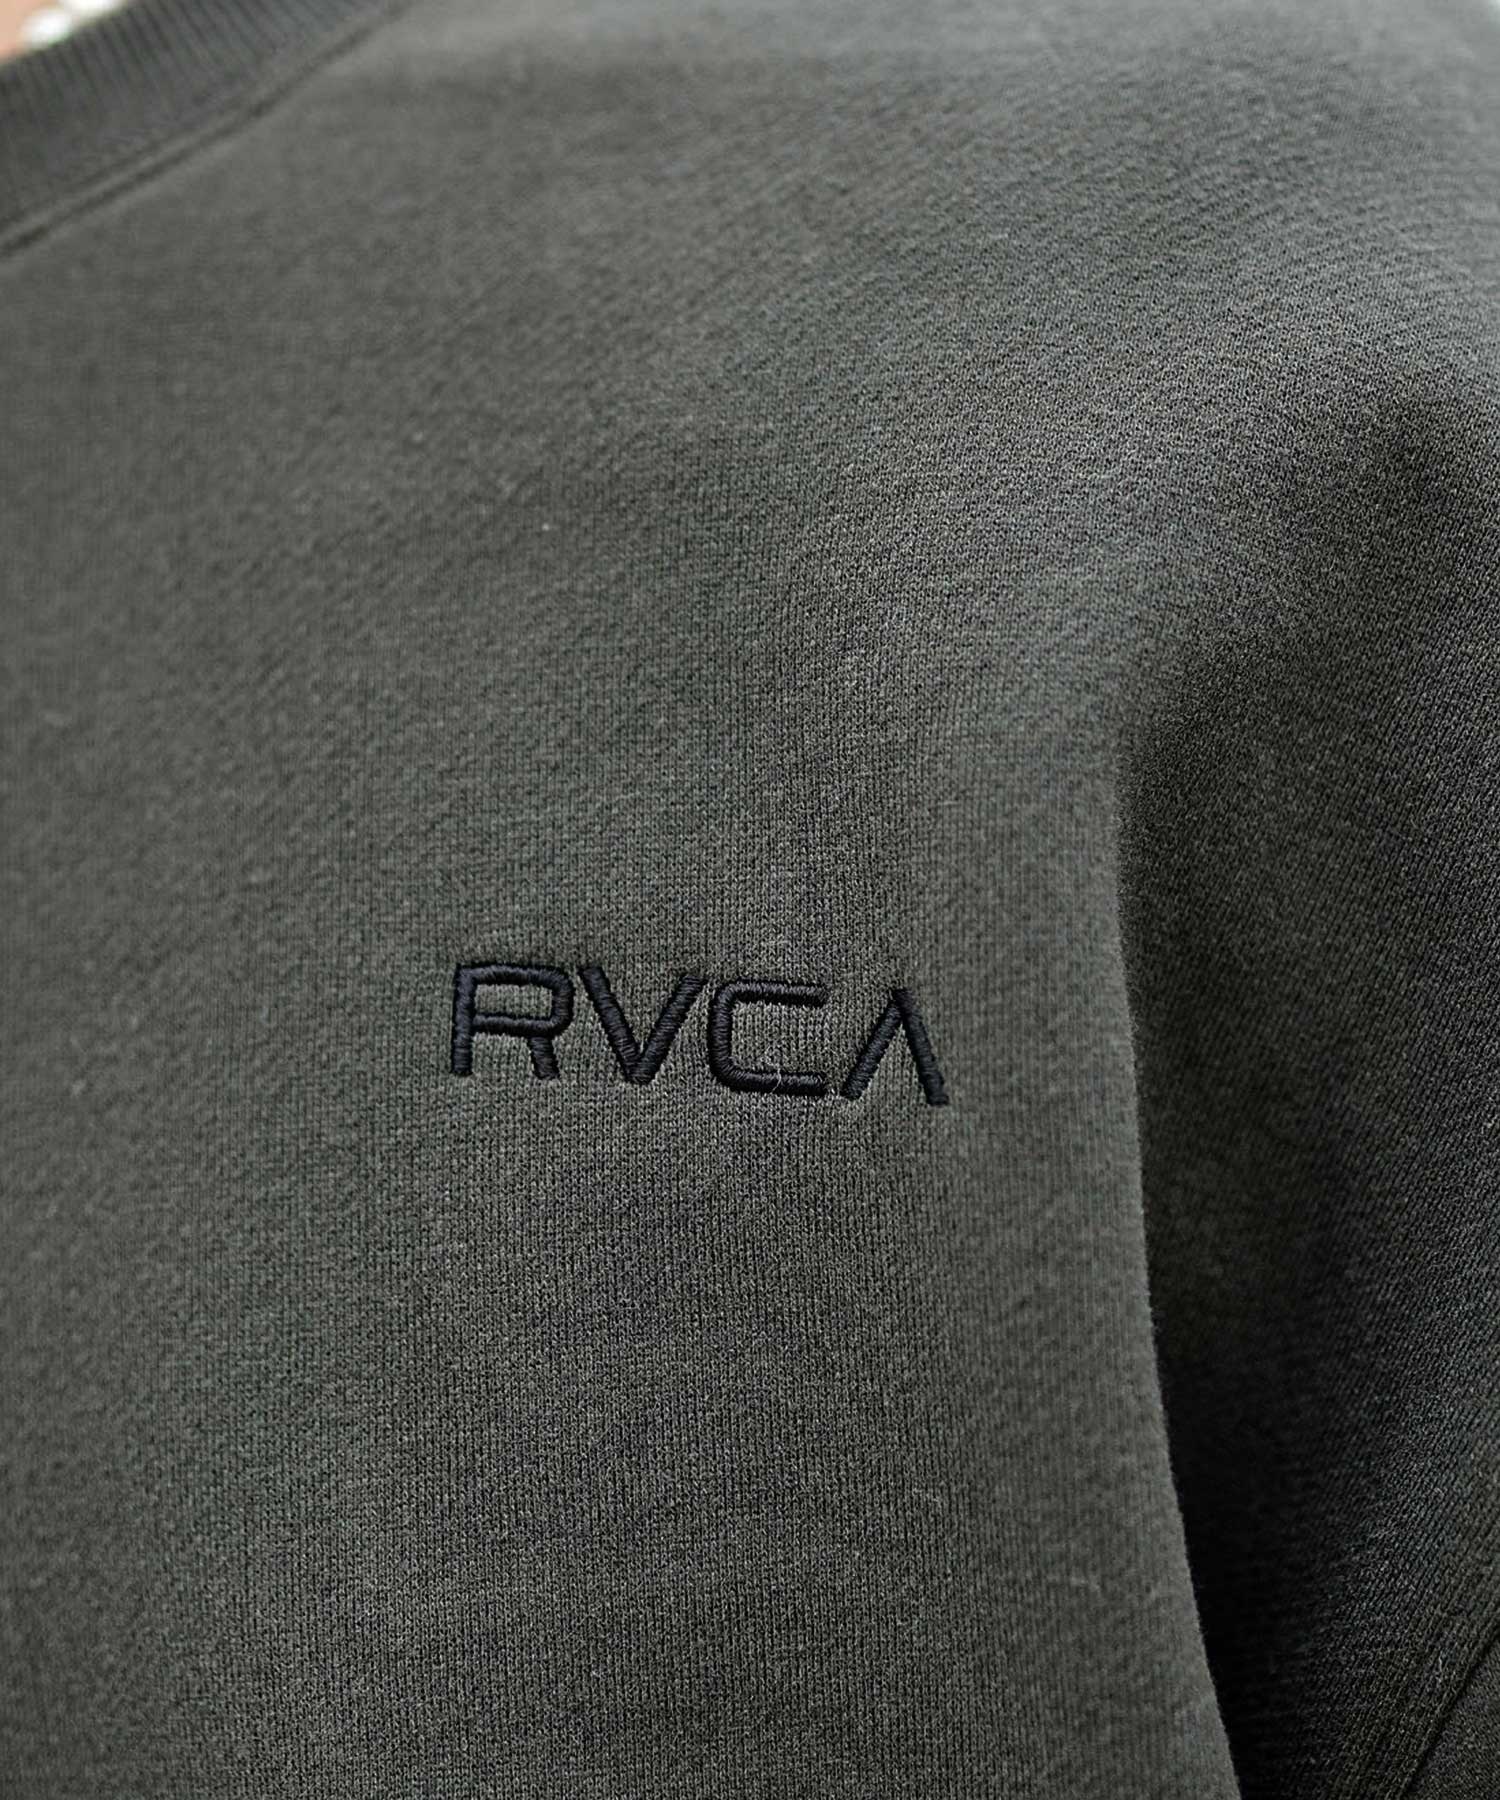 RVCA/ルーカ FAKE RVCA CR メンズ トレーナー クルーネック スウェット バックプリント 裏起毛 BD042-150(PTK-S)